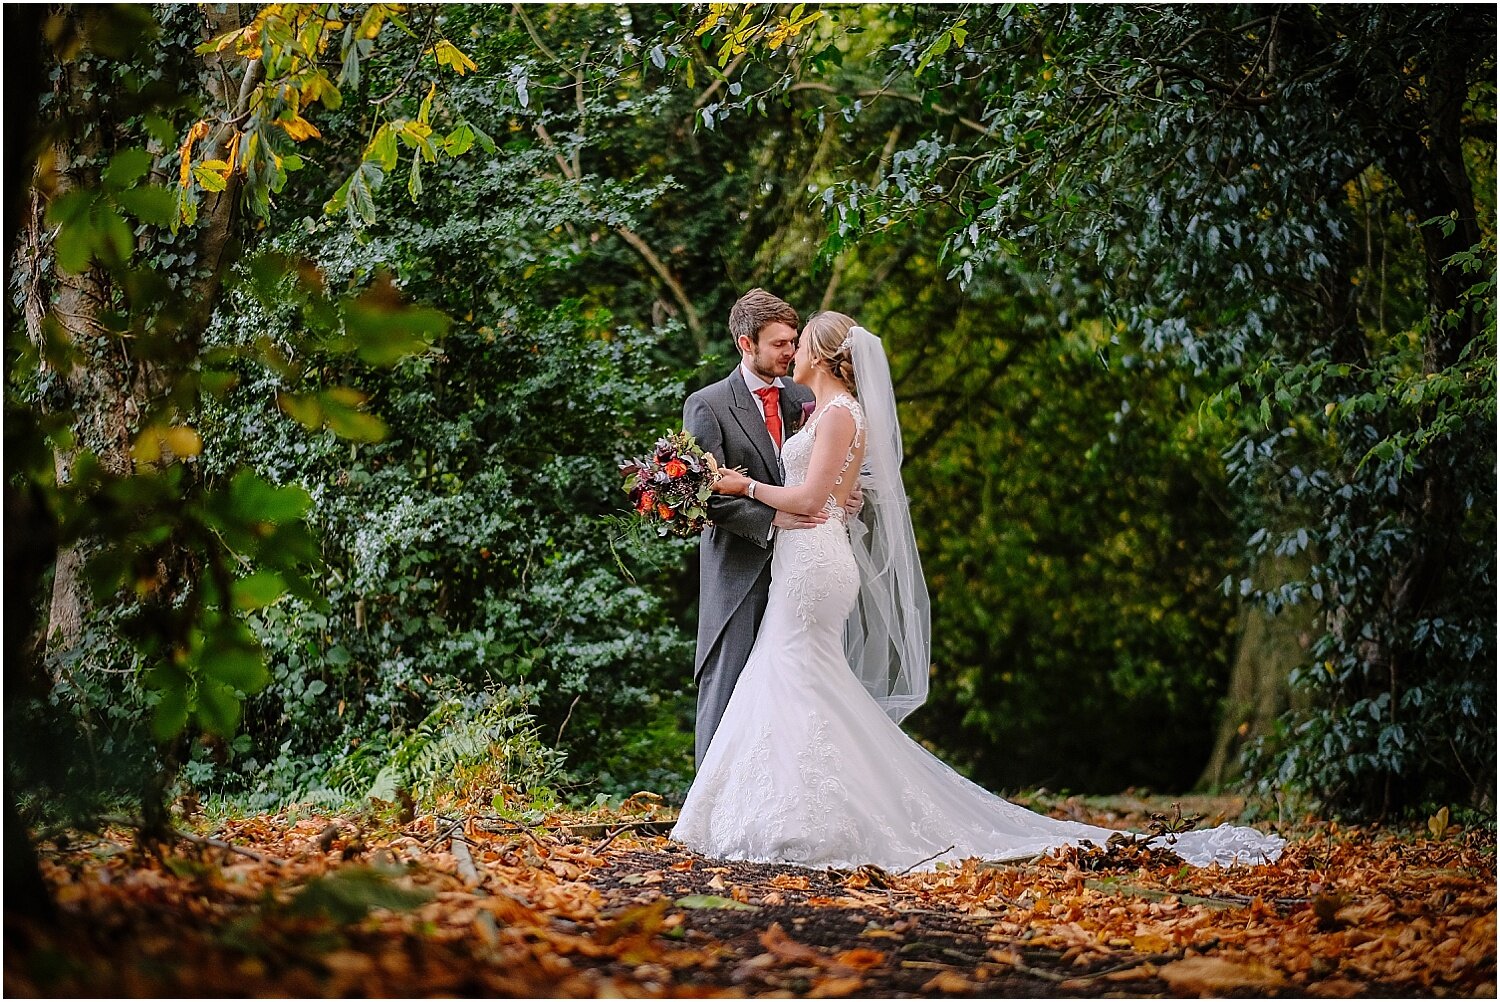 Ellingham Hall wedding photography by 2tone Photography 074.jpg